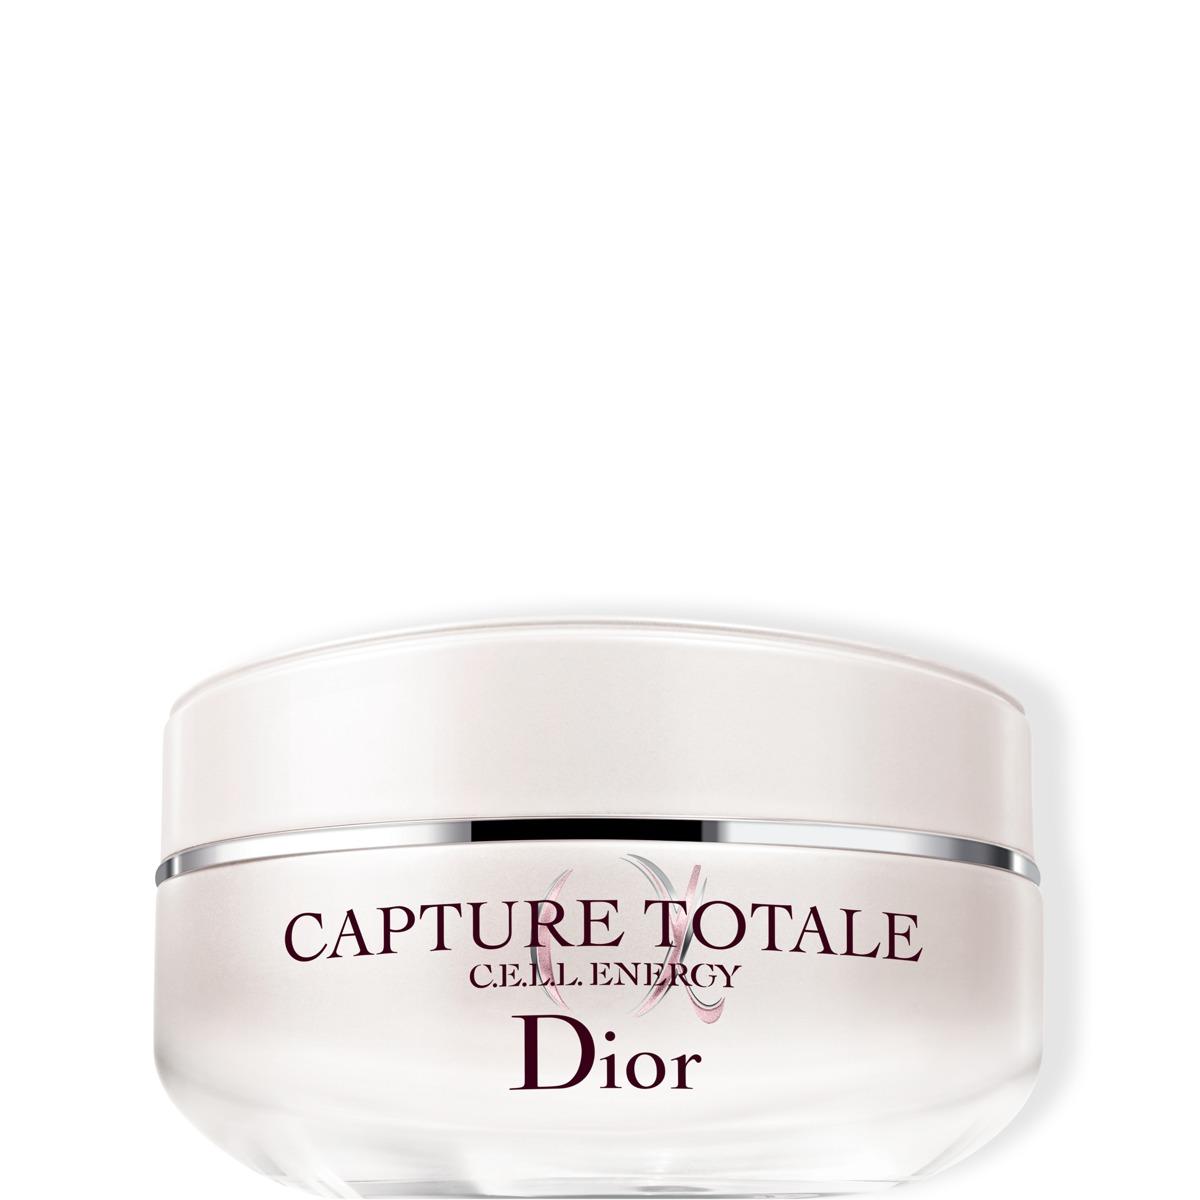 Крем для лица Dior Capture Totale C.E.L.L. Energy Cream укрепляющий, от морщин, 50 мл dior укрепляющий крем для лица и шеи корректирующий морщины capture totale c e l l energy